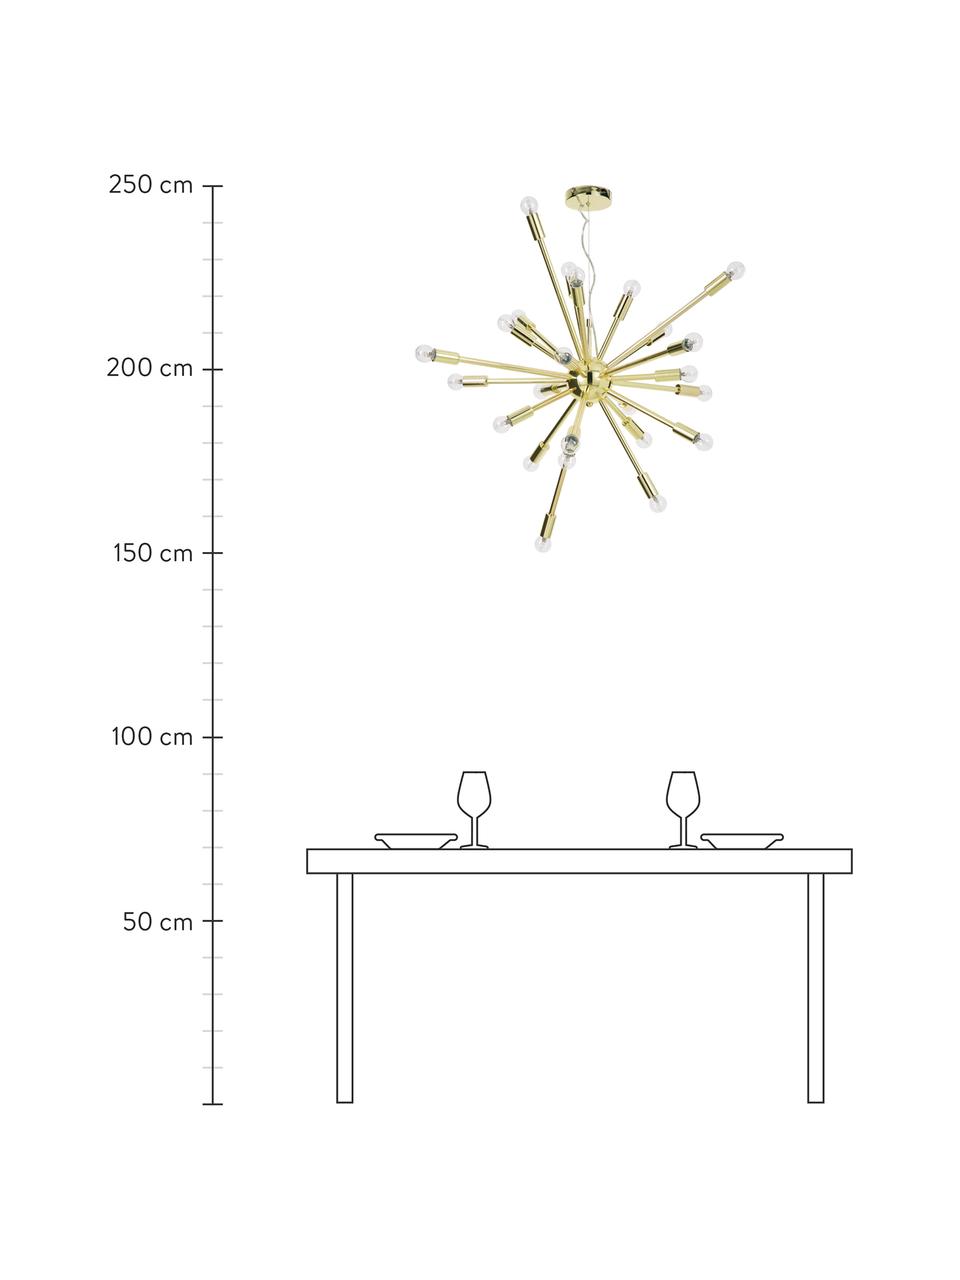 Grote hanglamp Spike in goudkleur, Lampenkap: metaal, Baldakijn: metaal, Baldakijn: goudkleurig. Lampenkap: goudkleurig. Snoer: transparant, Ø 90 cm